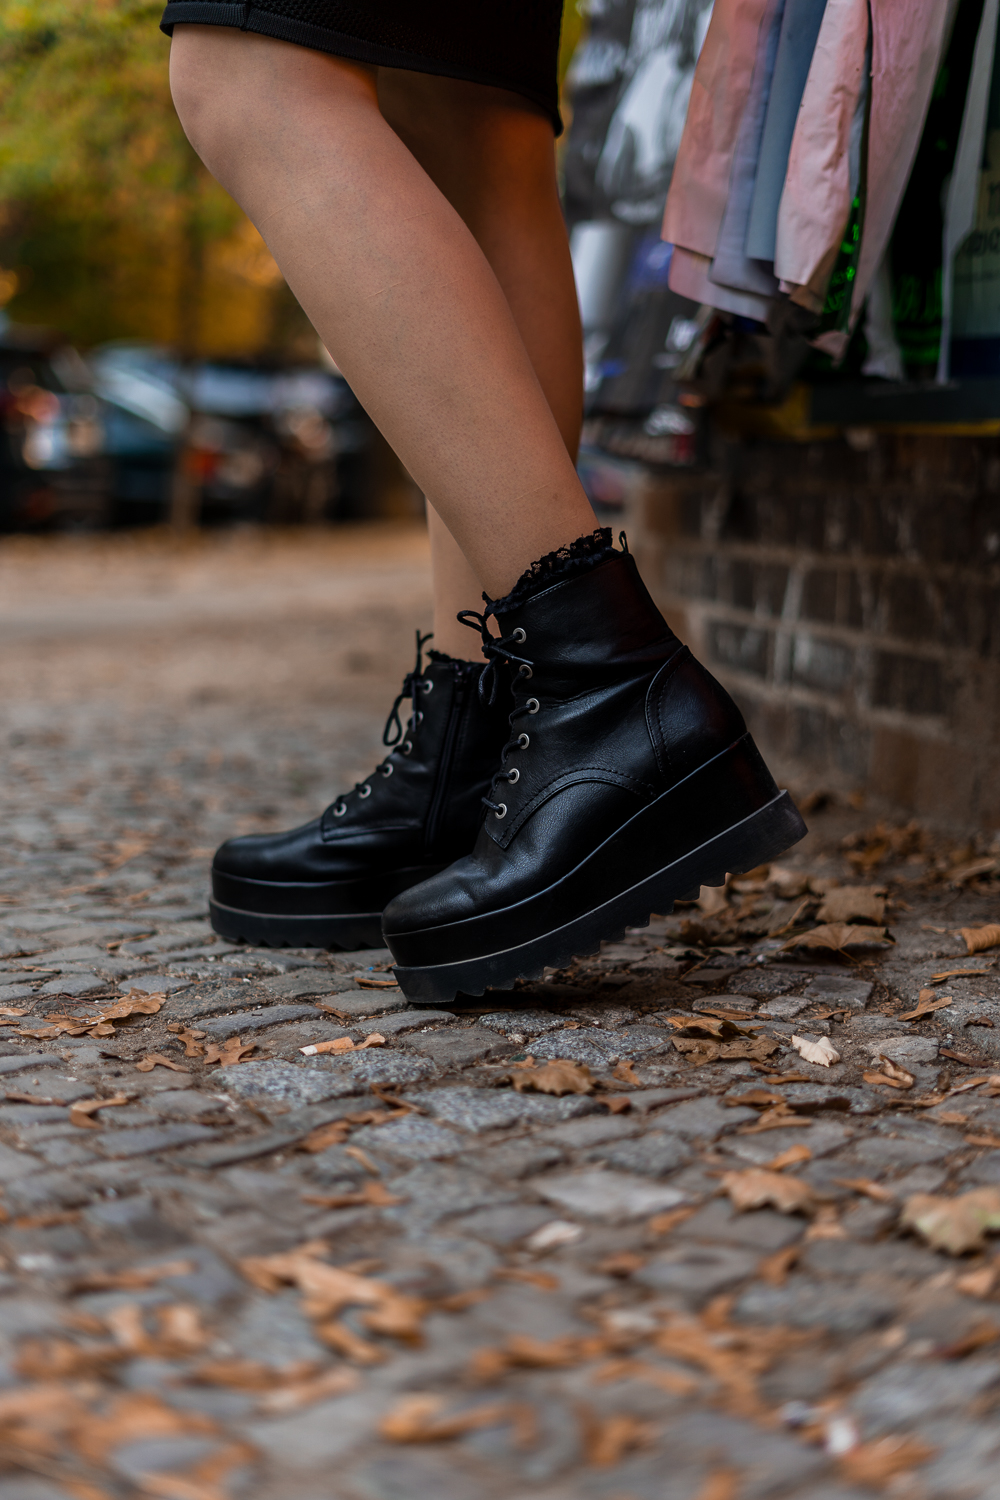 Herbstlook mit Mantel-Plateau Boots kombinieren-Berlin Friedrichshain-Modeblog Berlin-andysparkles